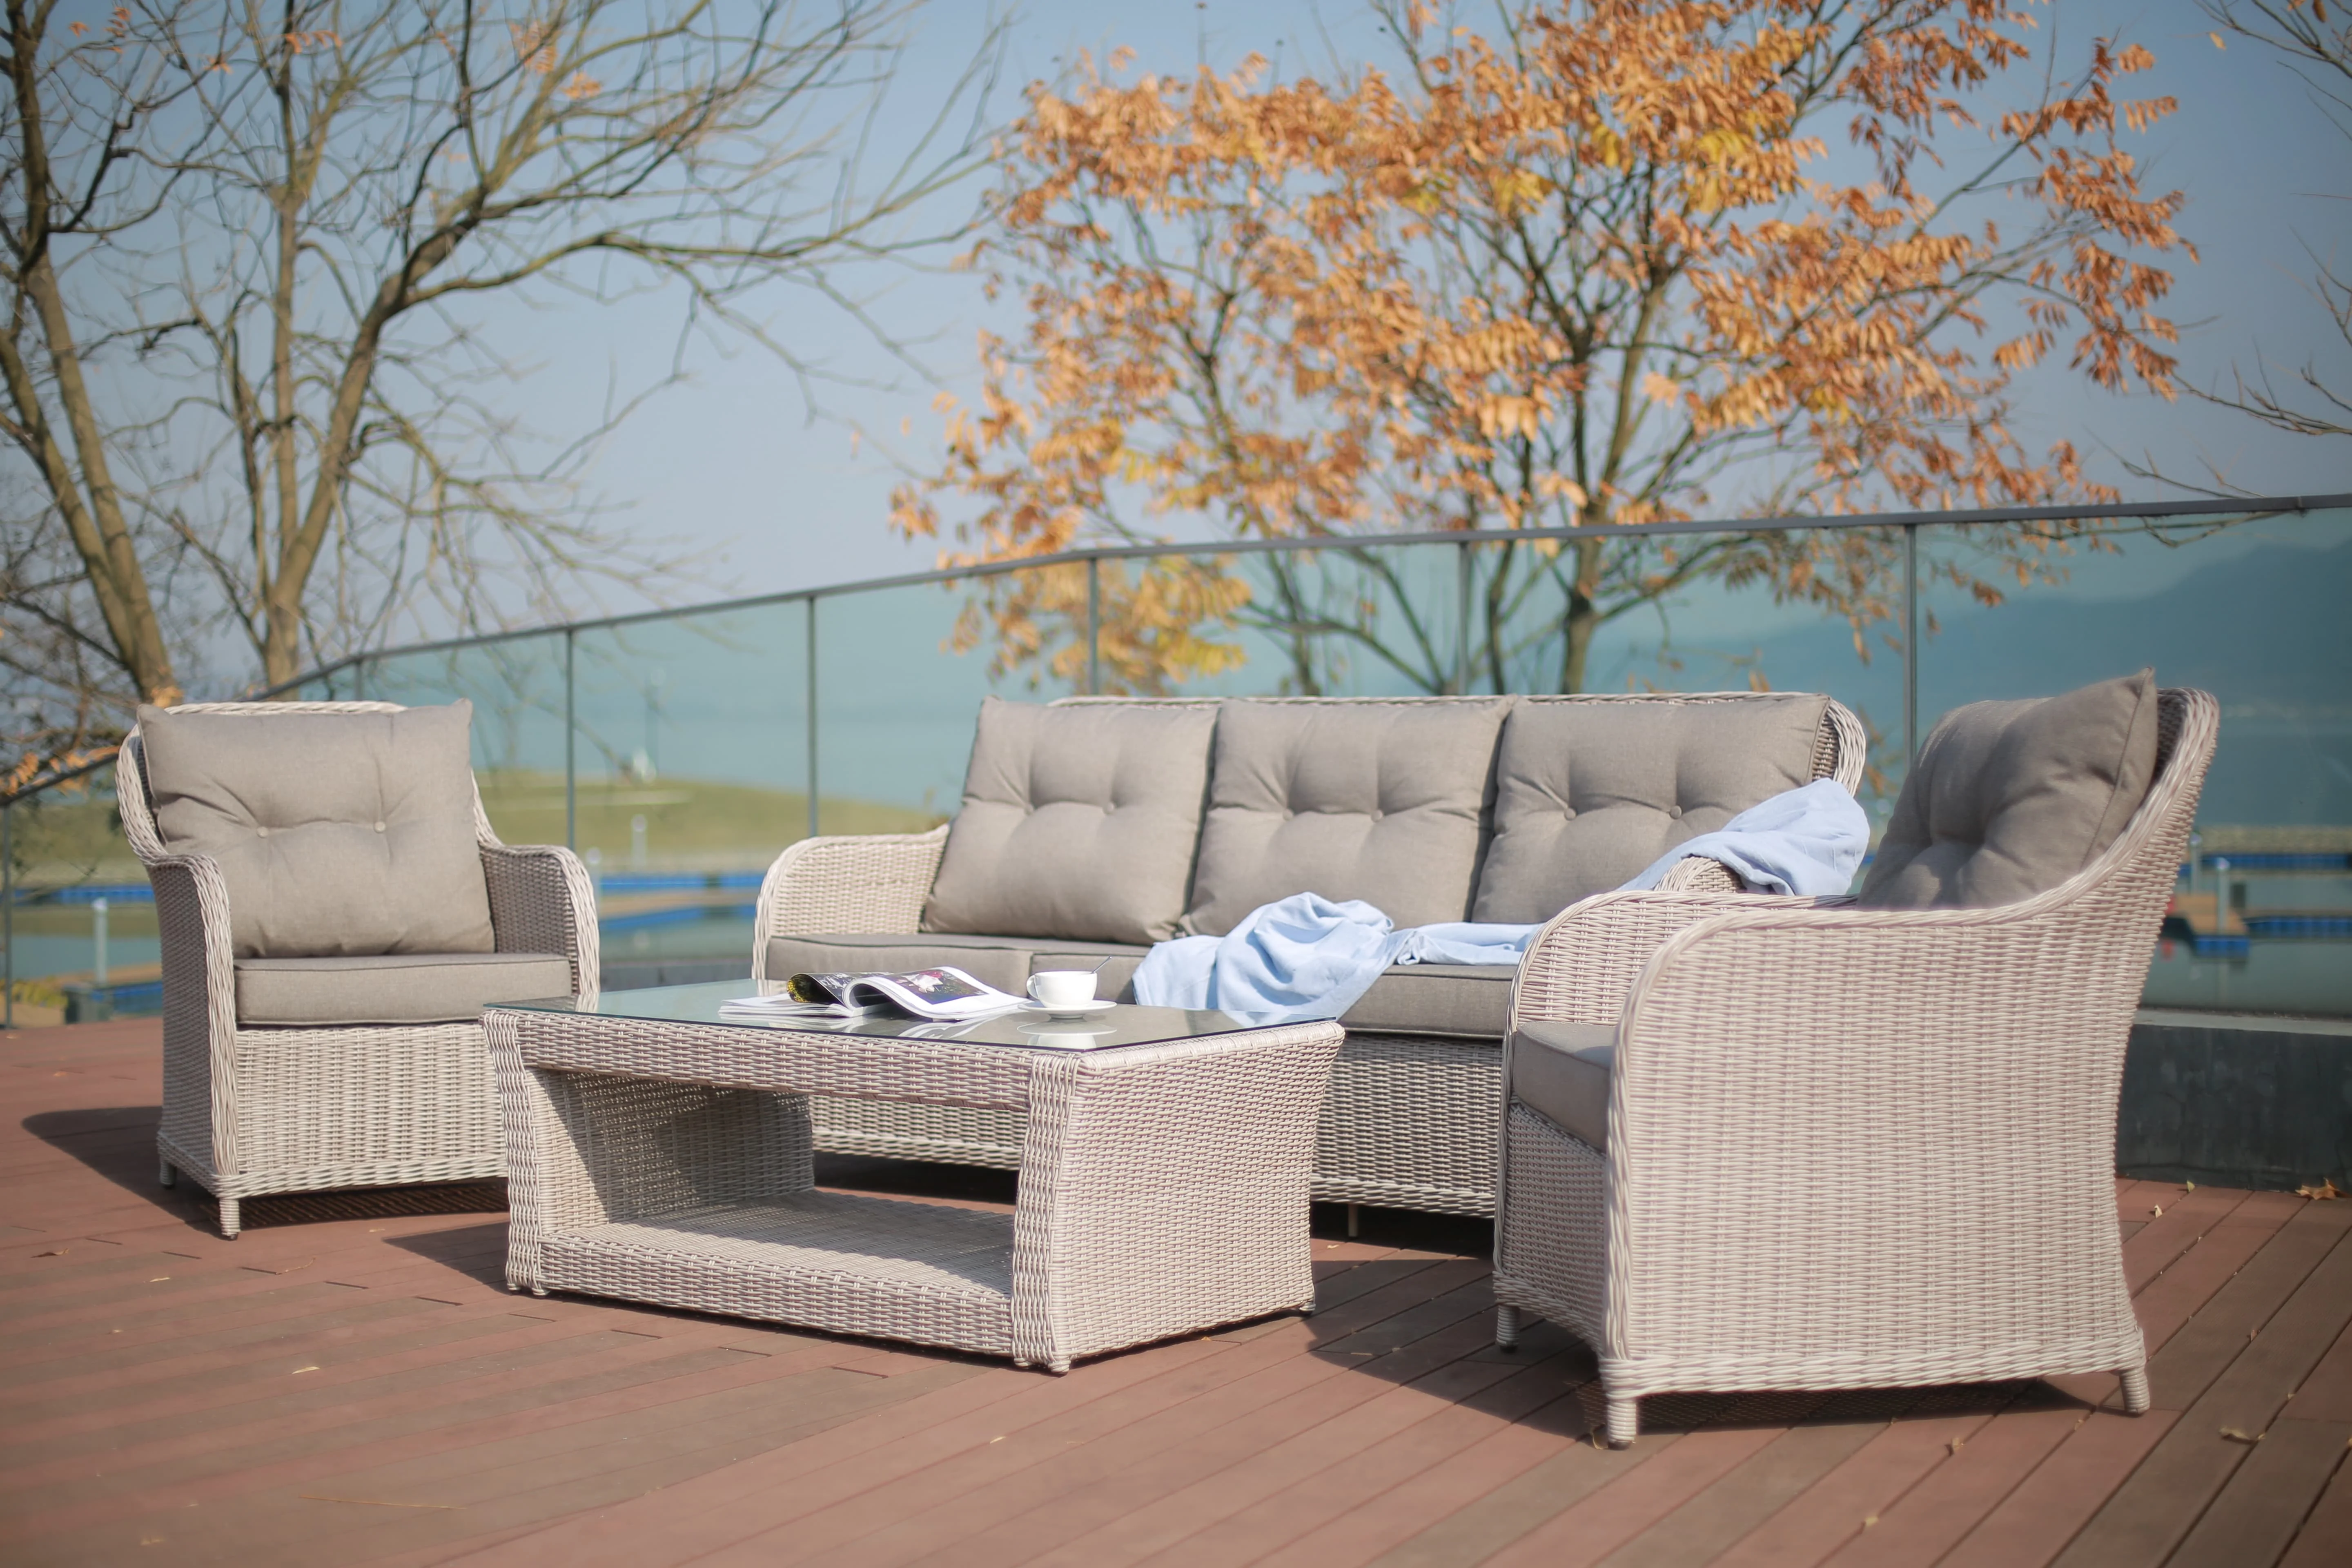 
Modern design popular four piece set courtyard garden furniture outdoor rattan sofa 